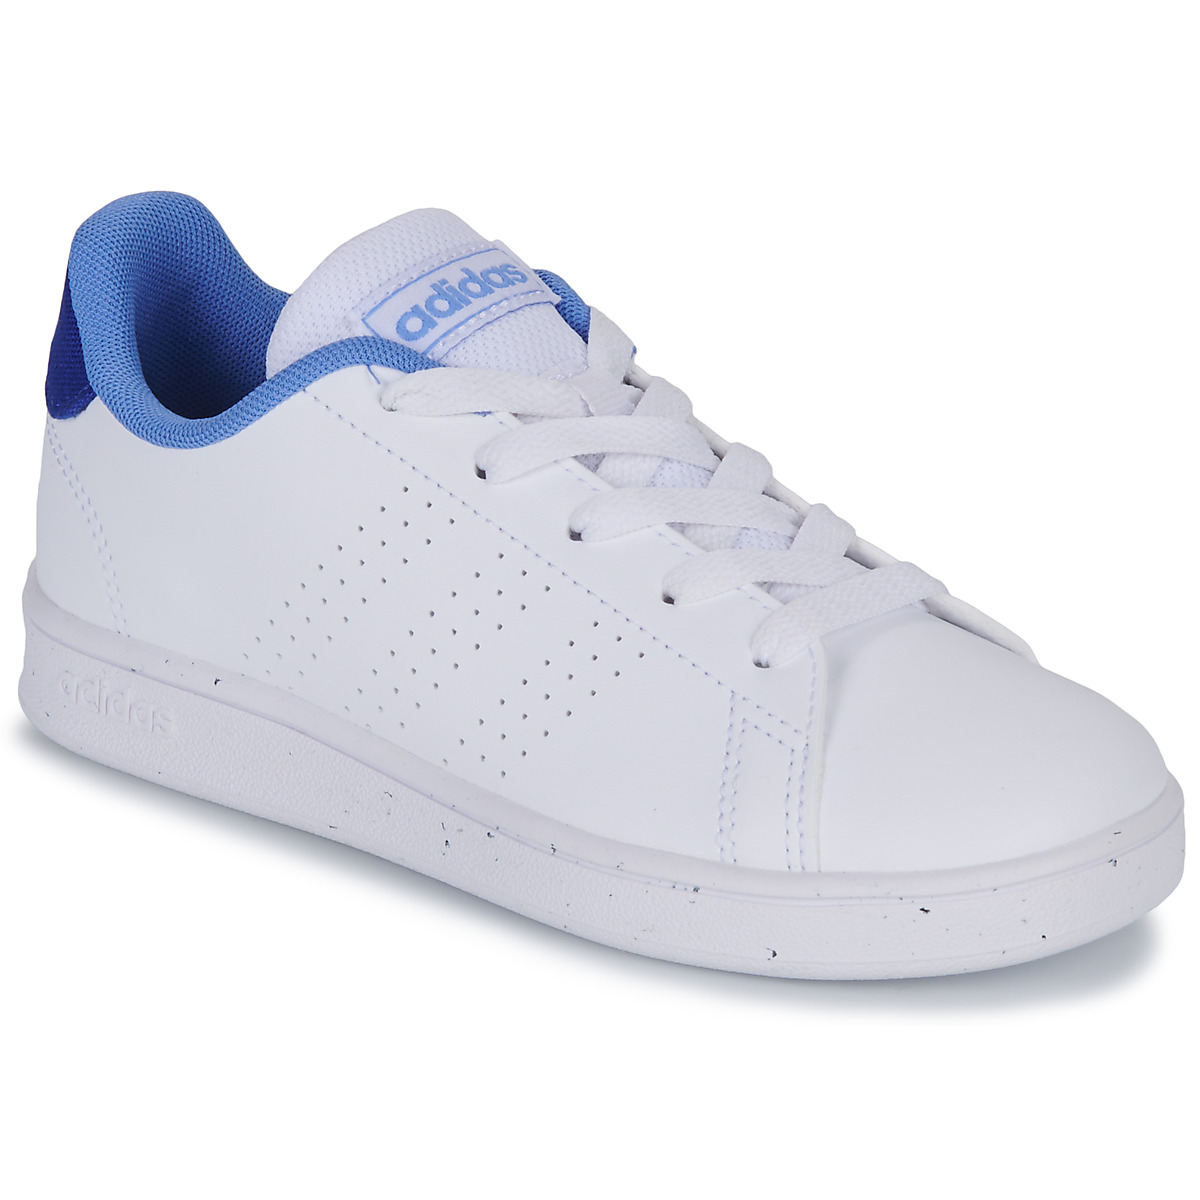 Shoes Children Low top trainers Adidas Sportswear ADVANTAGE K White / Blue